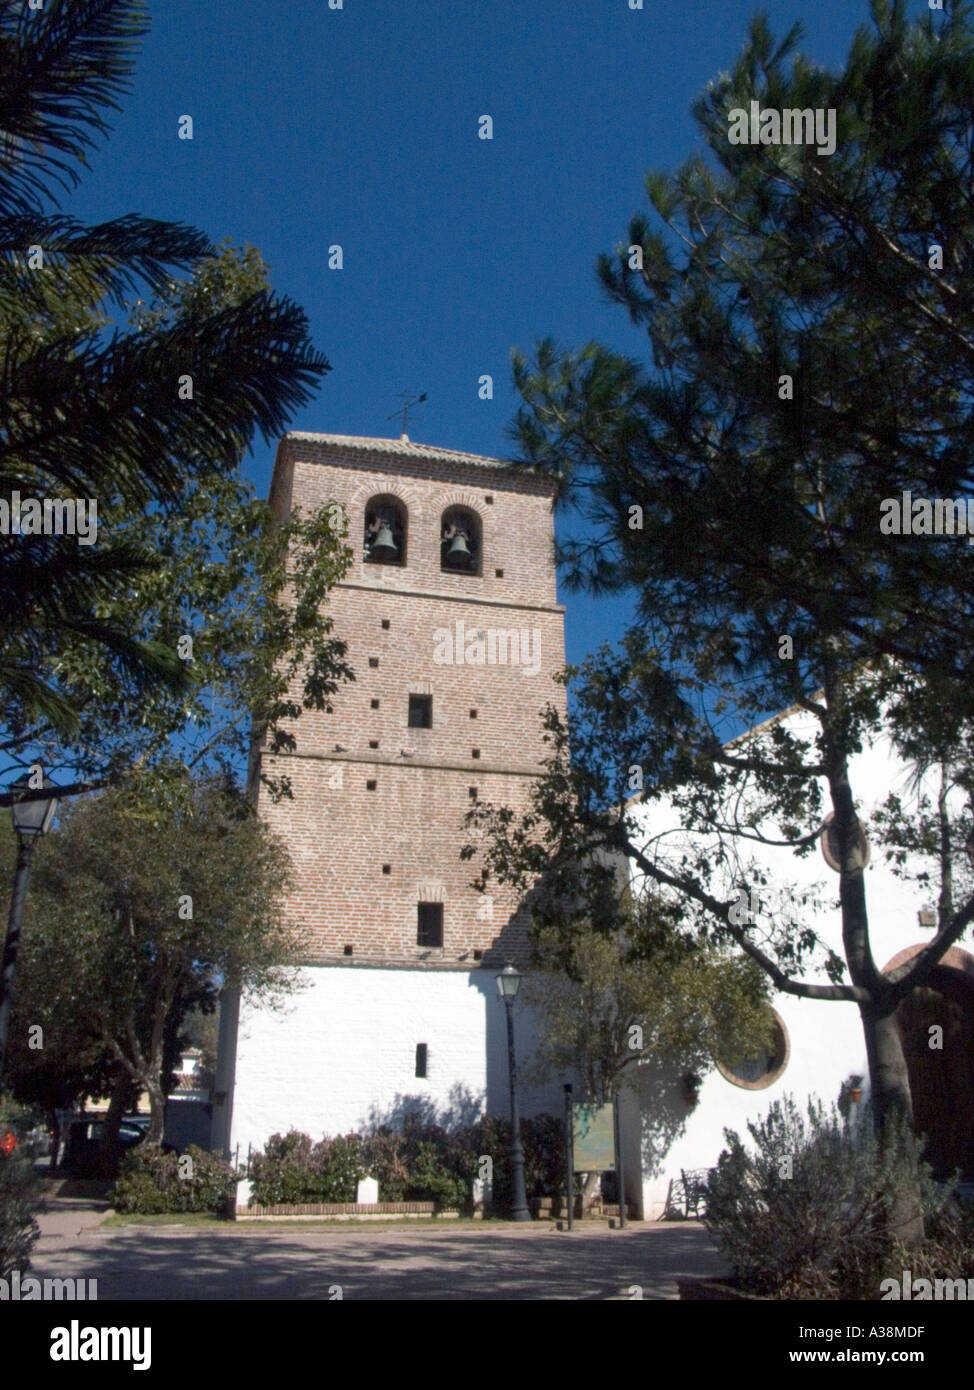 Mudéjar style bell tower, Parroquia de la Inmaculada Concepcion (Church of the Immaculate Conception), Mijas Pueblo, Spain Stock Photo